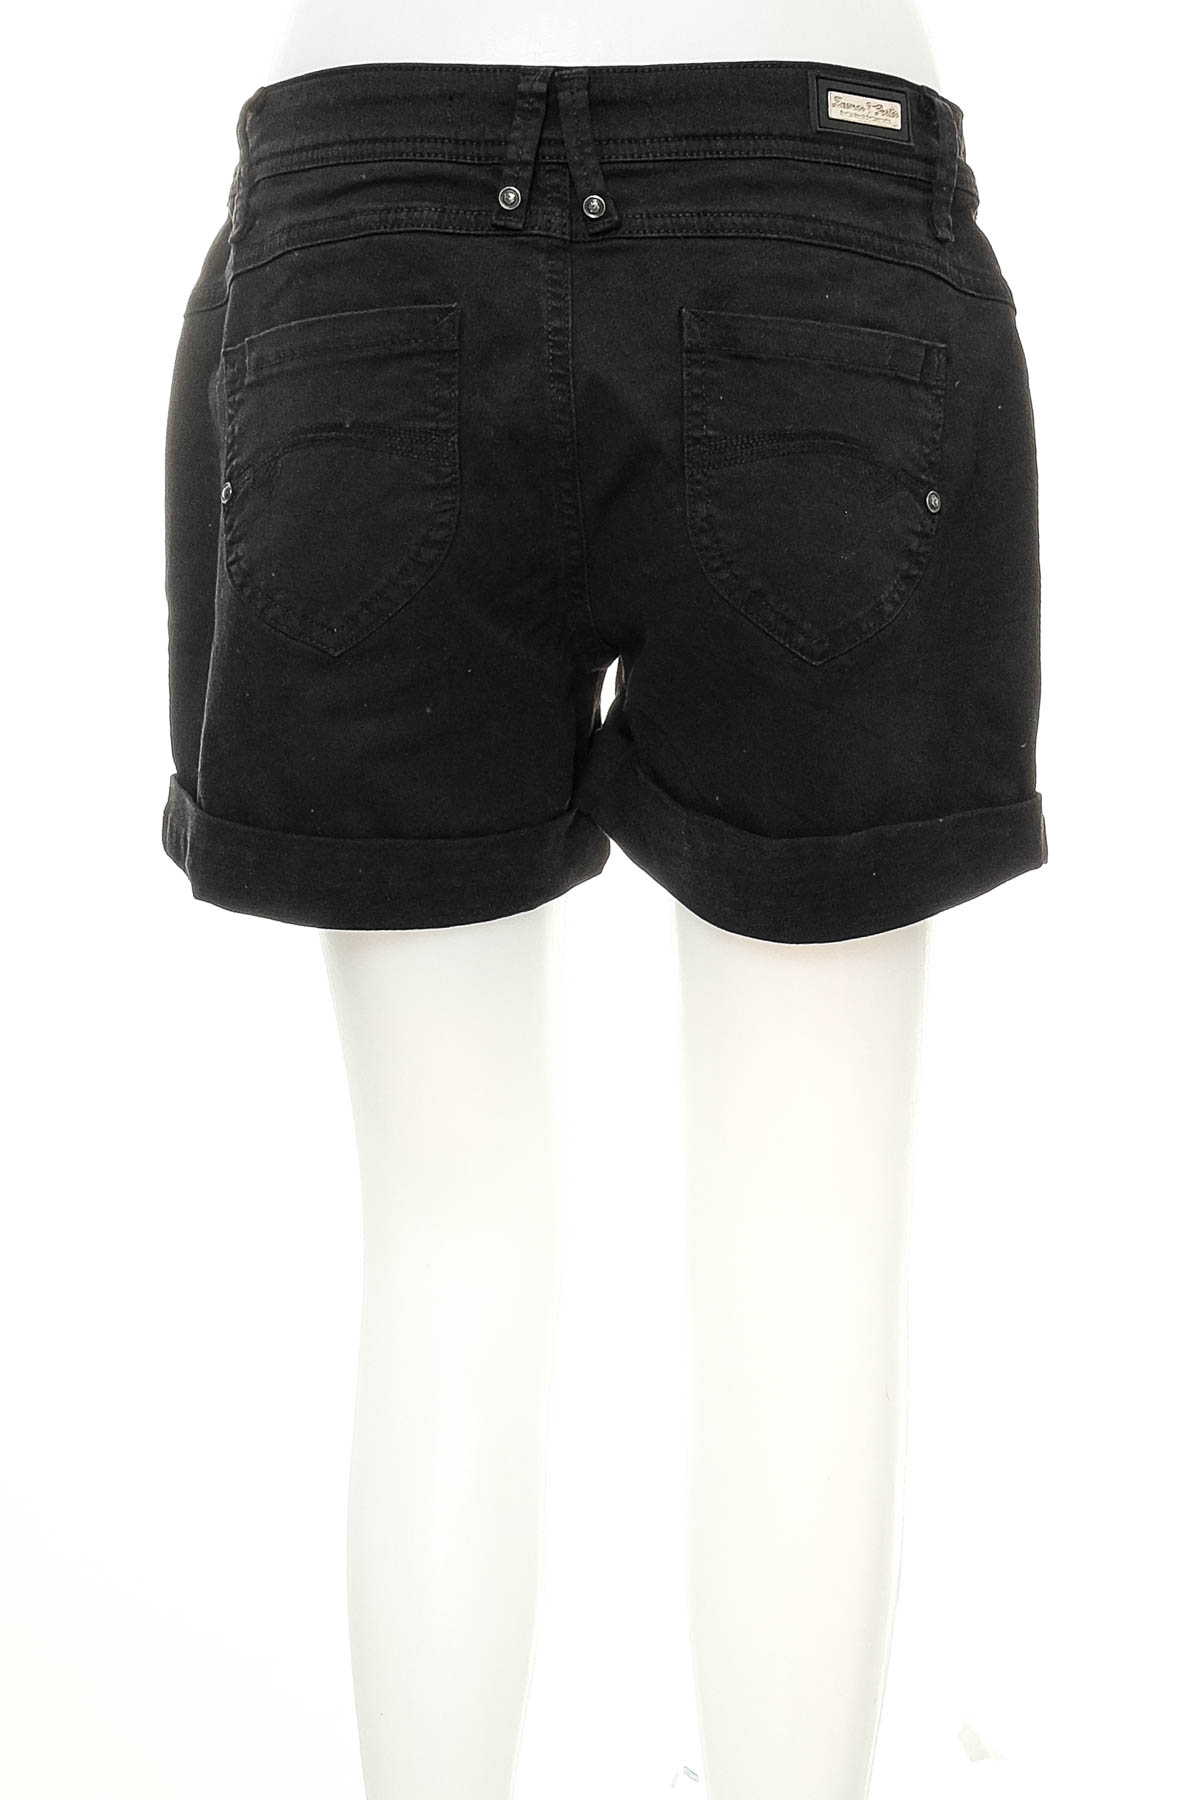 Female shorts - Freeman T. Porter - 1